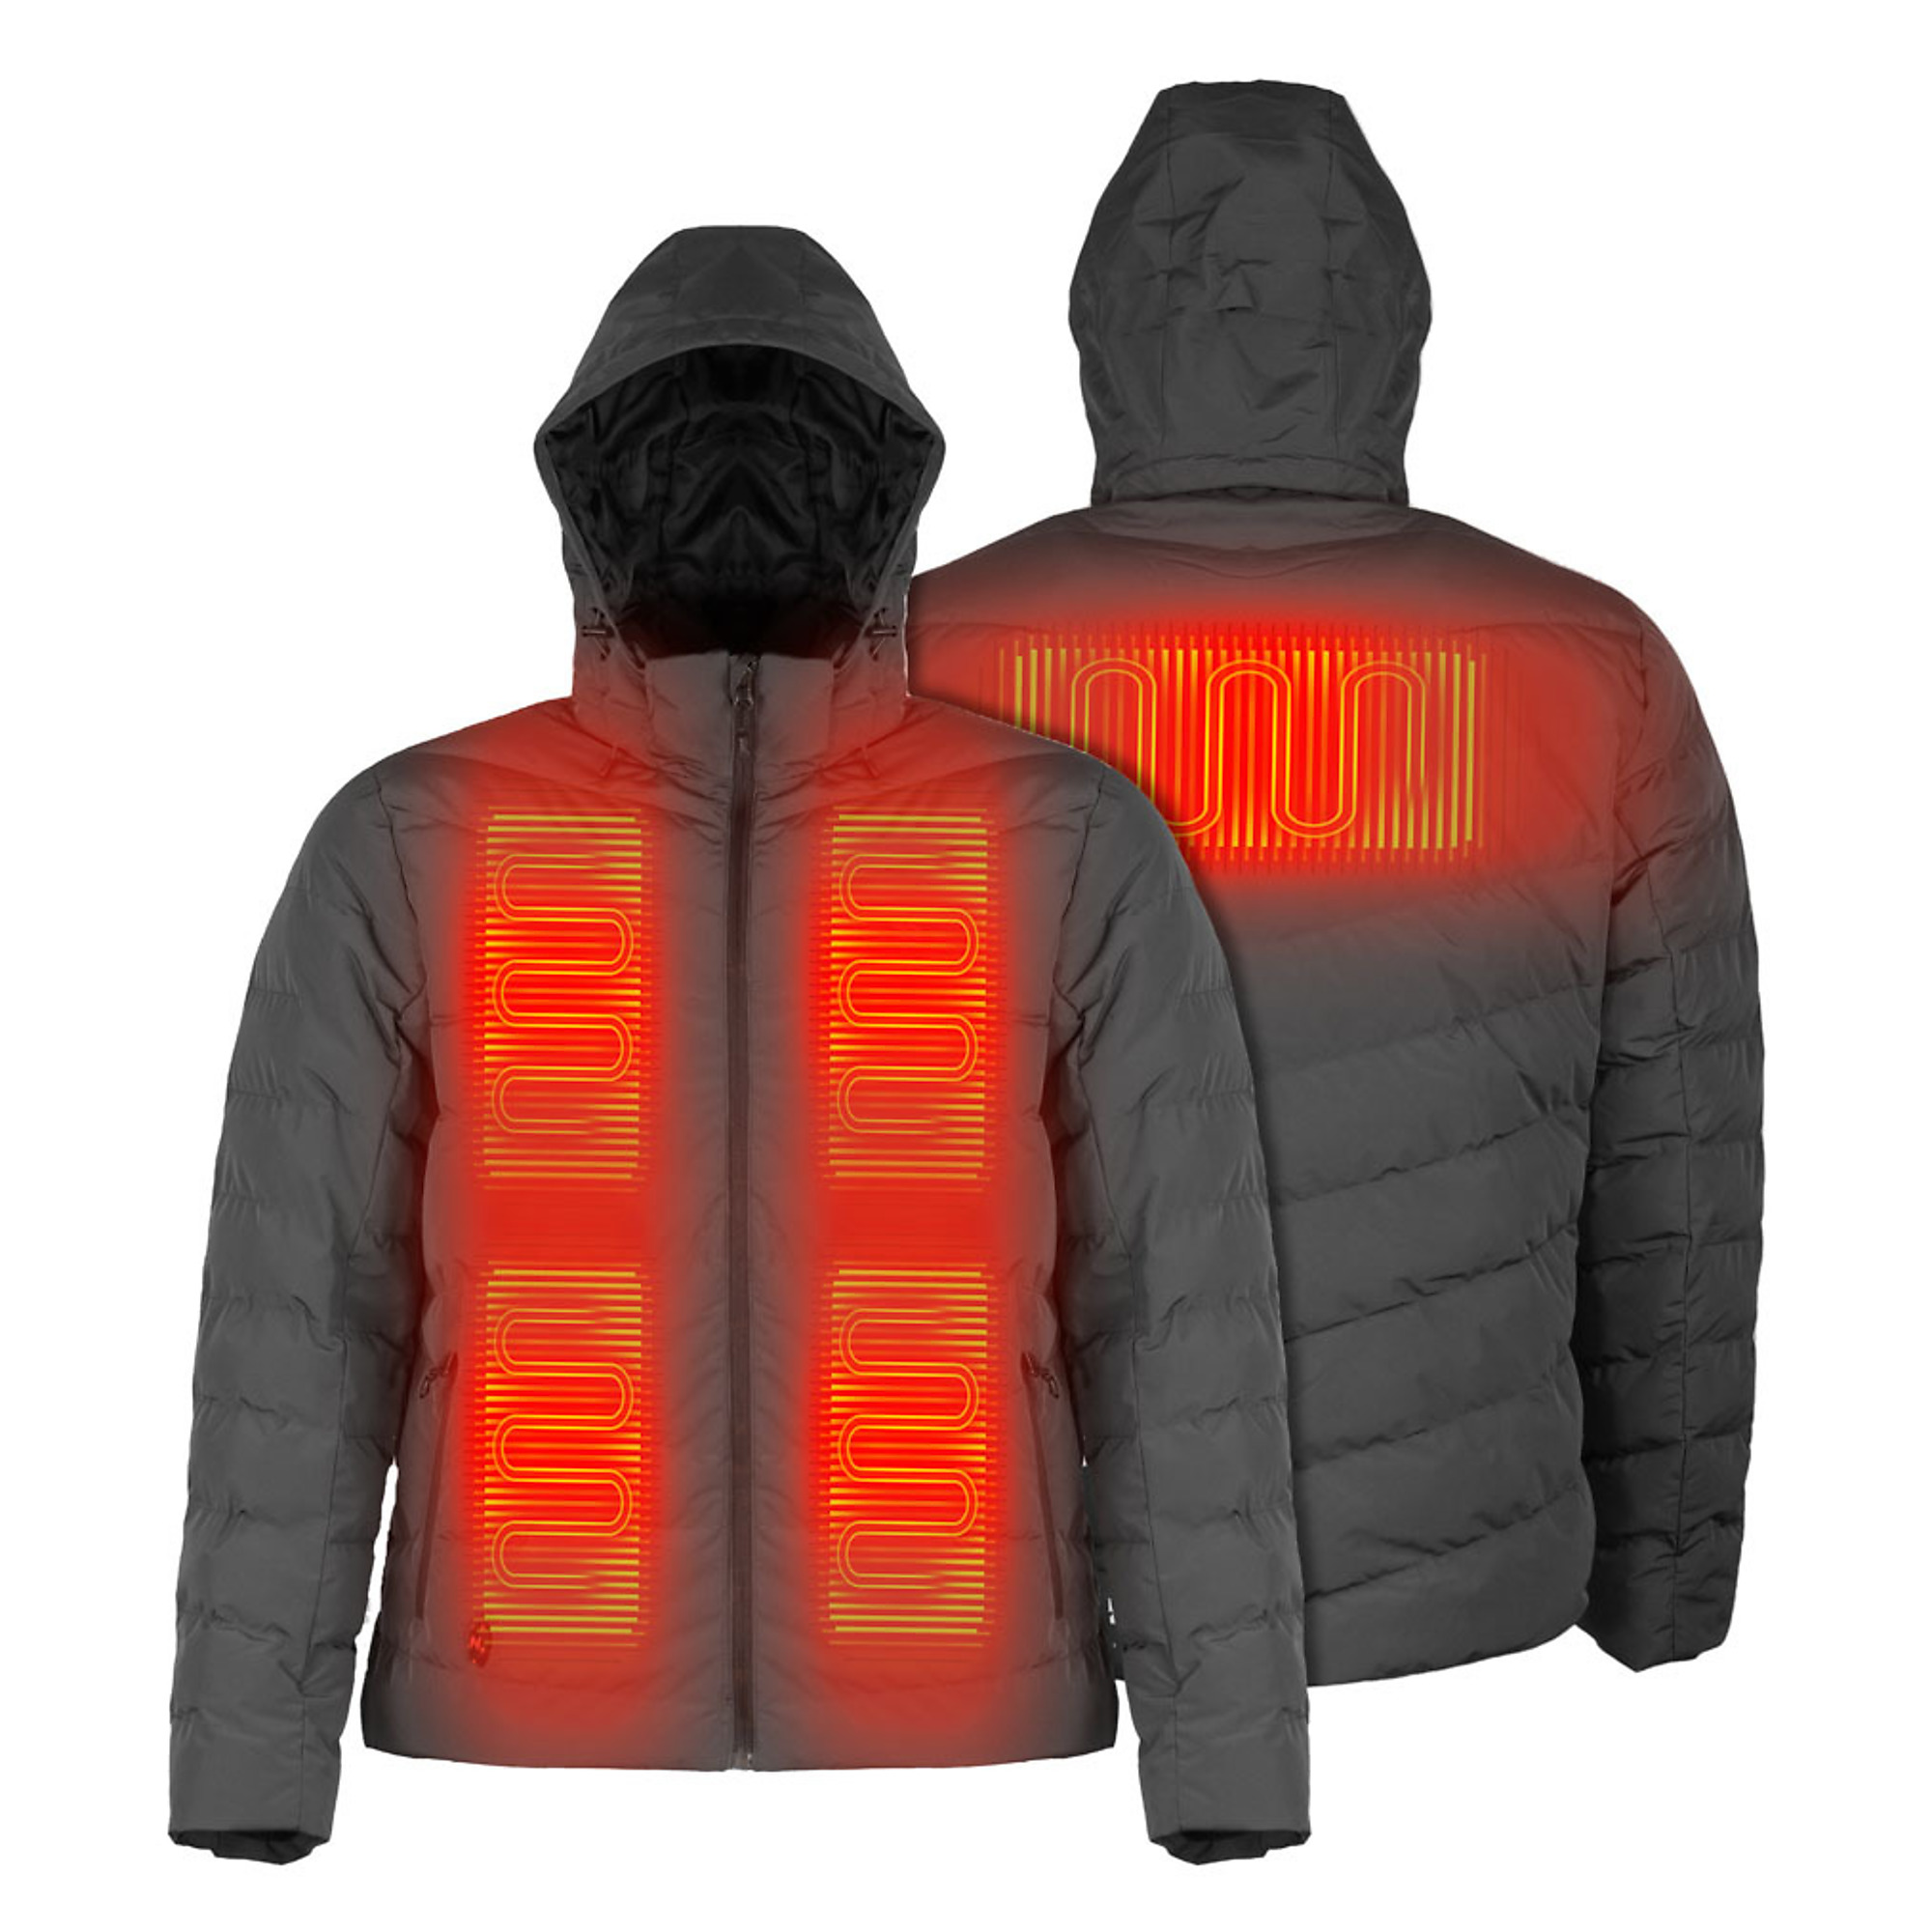 Fieldsheer, Men's Crest Heated Jacket with 7.4v Battery, Size M, Color Black, Model MWMJ37010322